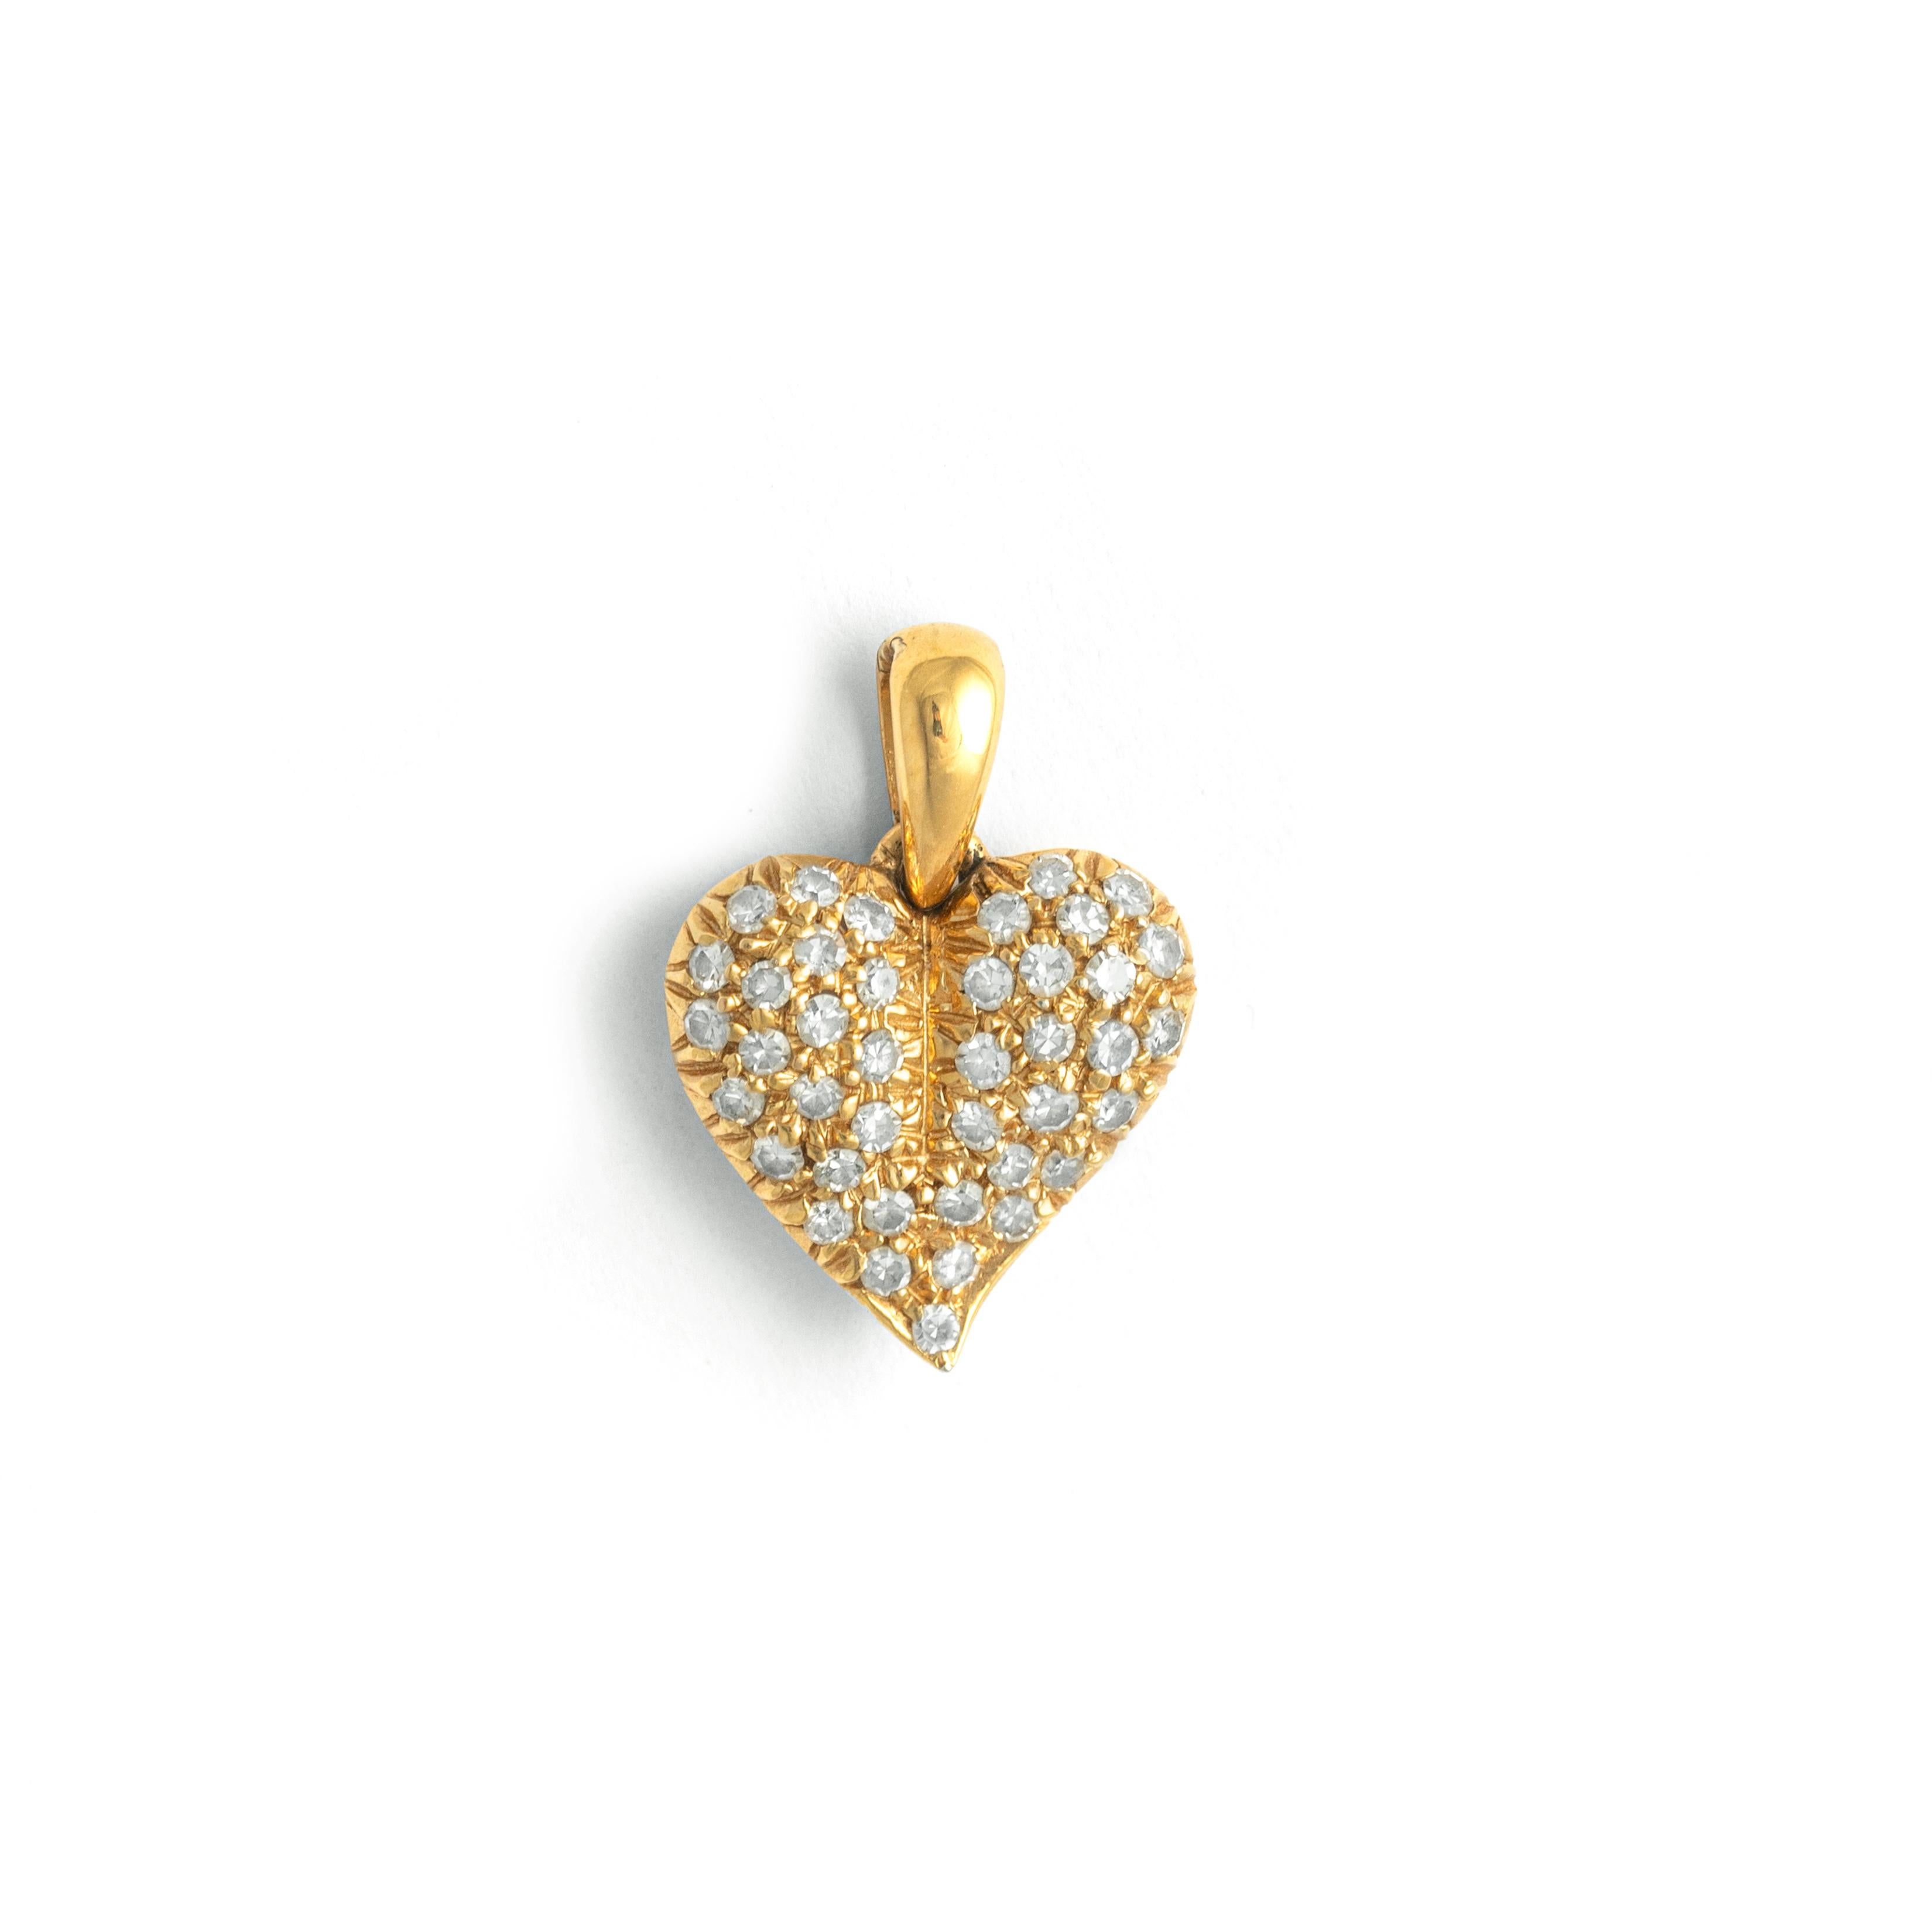 Diamond Yellow Gold 18K Heart Design Pendant.
Height: 1.60 centimeters.
Width: 1.10 centimeters.
Depth: 0.40 centimeters.

Weight: 1.96 grams.
